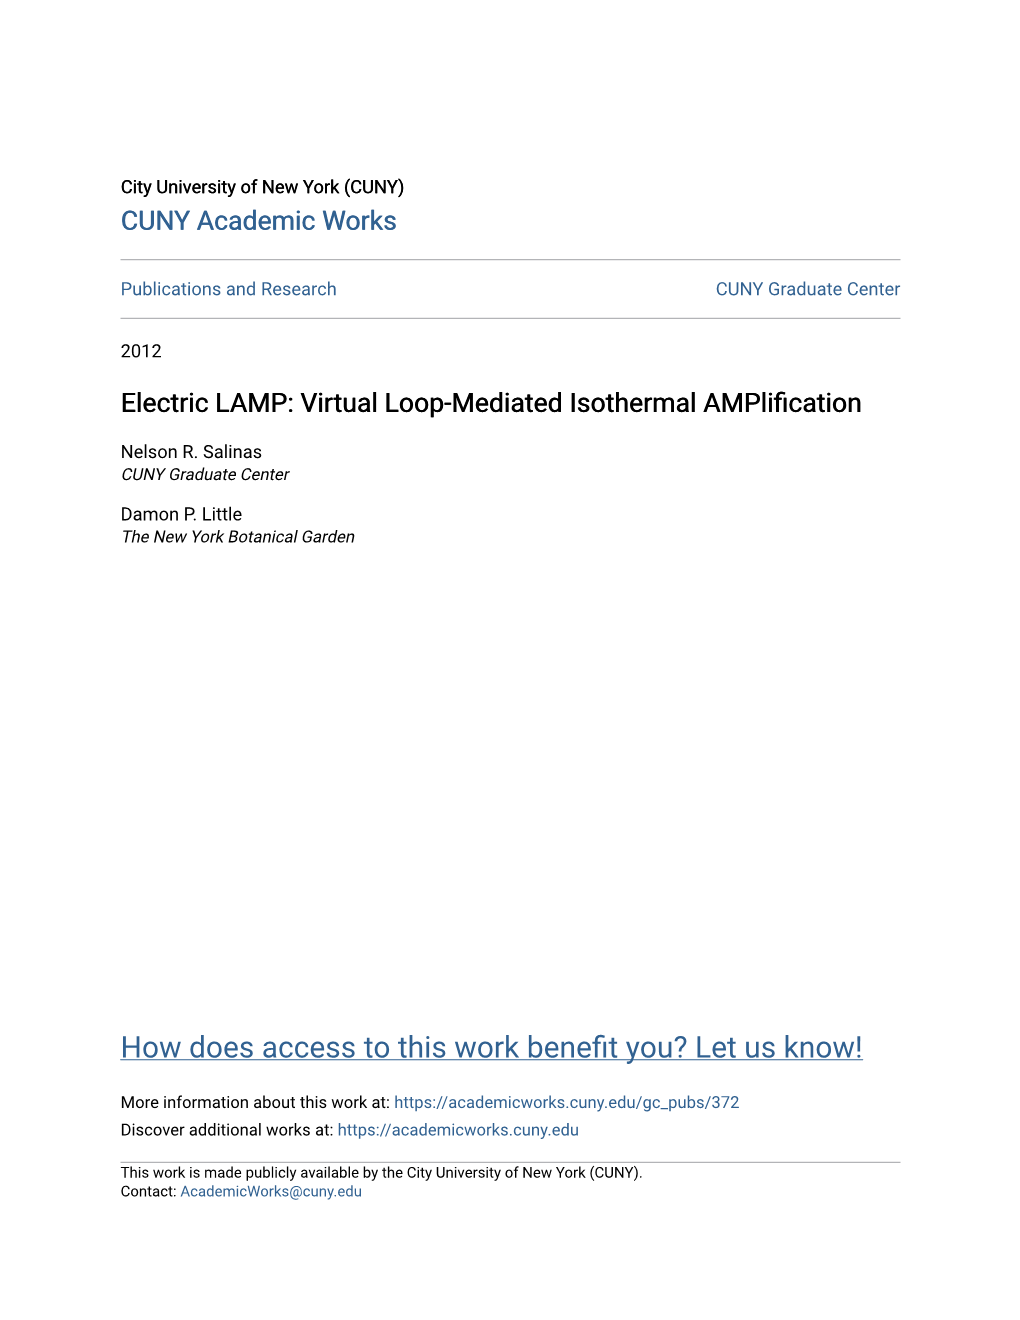 Electric LAMP: Virtual Loop-Mediated Isothermal Amplification